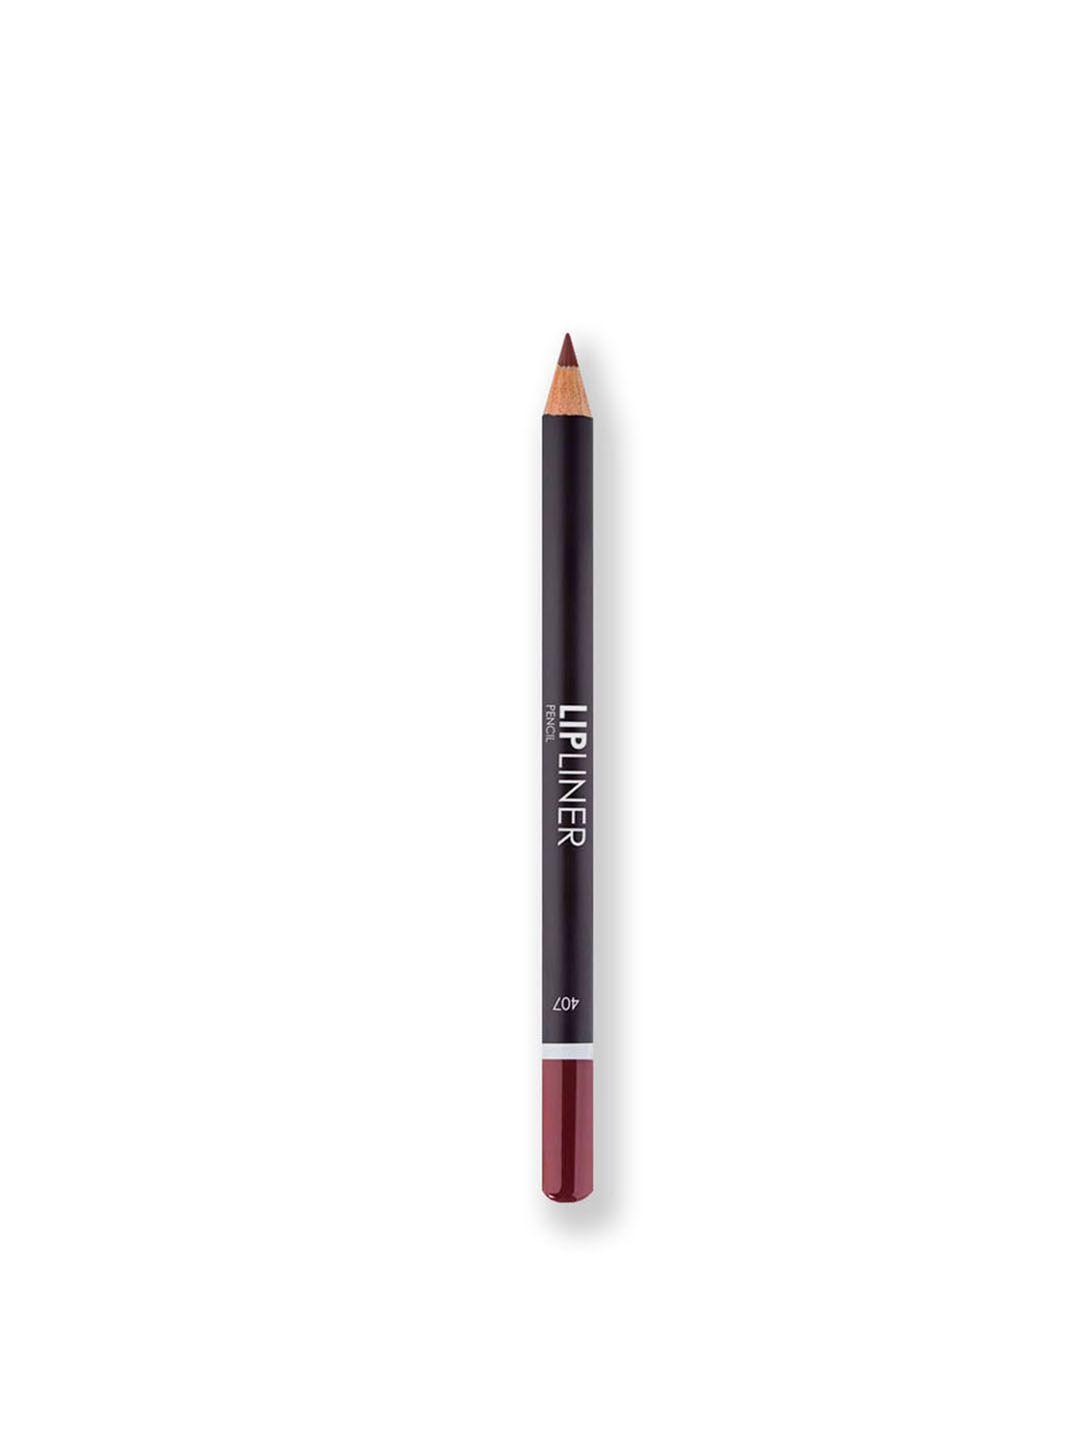 lamel long-lasting semi-matte smudge-proof lip pencil - pink nude 407